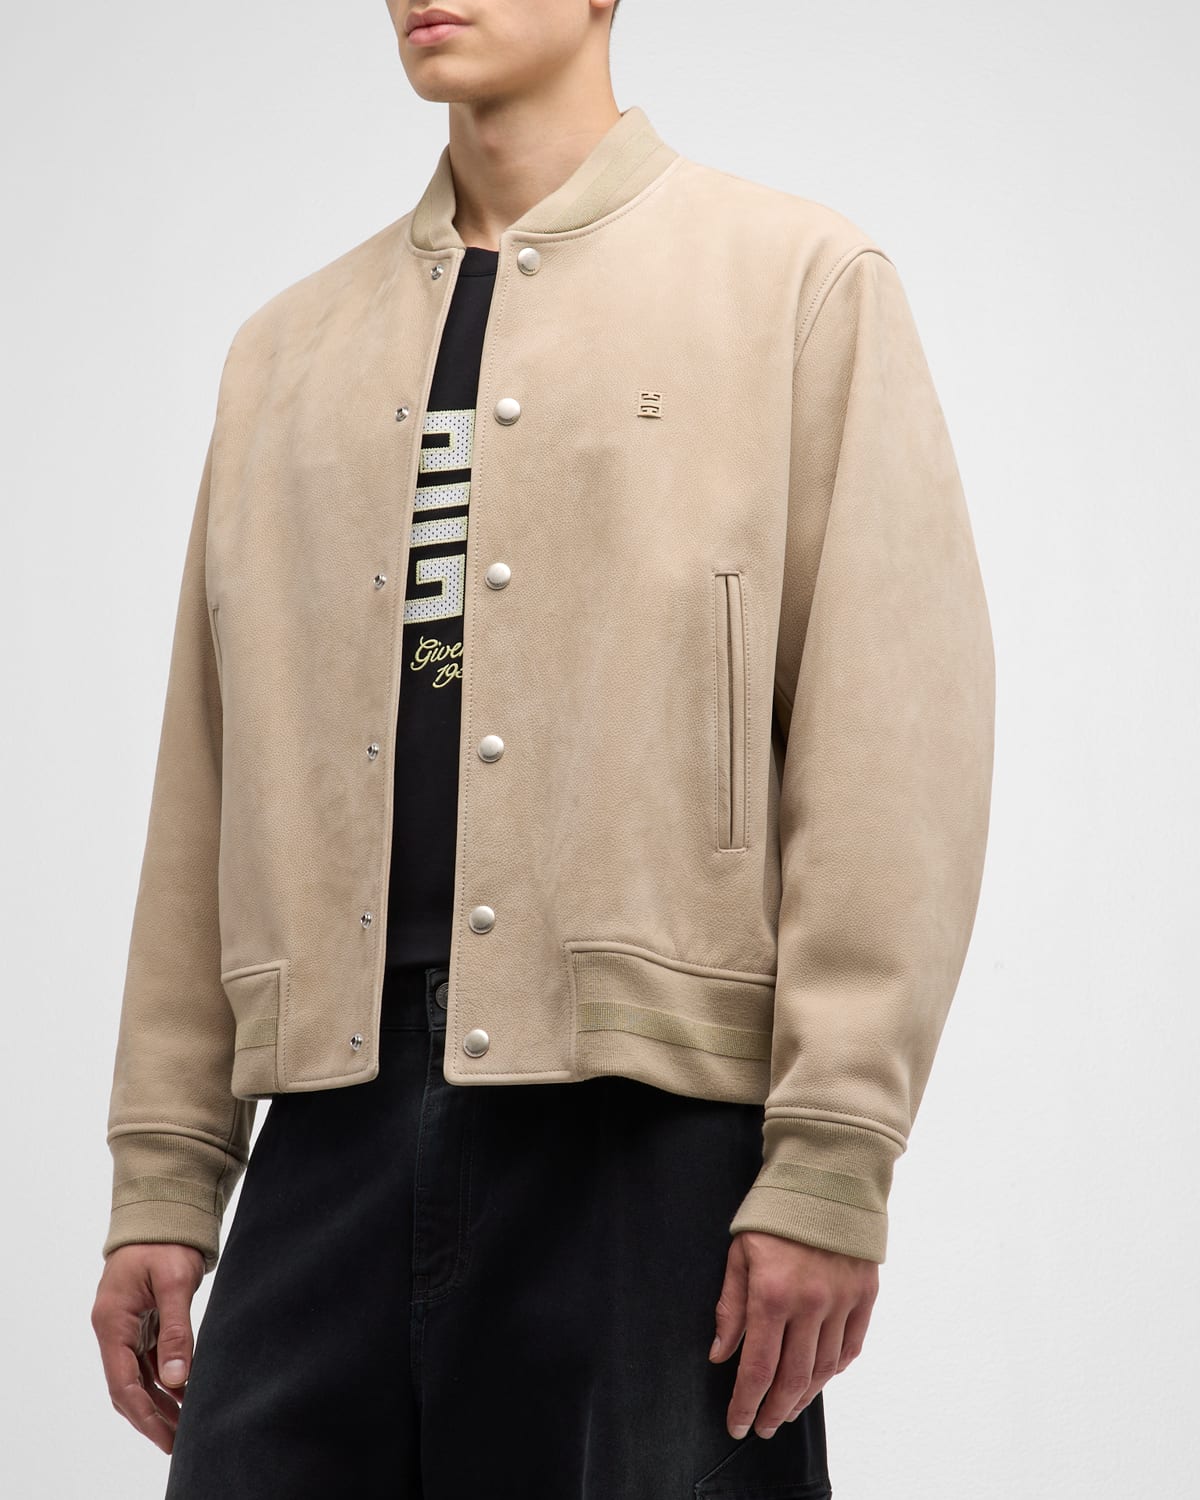 Givenchy Men's Tonal Leather Varsity Jacket In Neutral